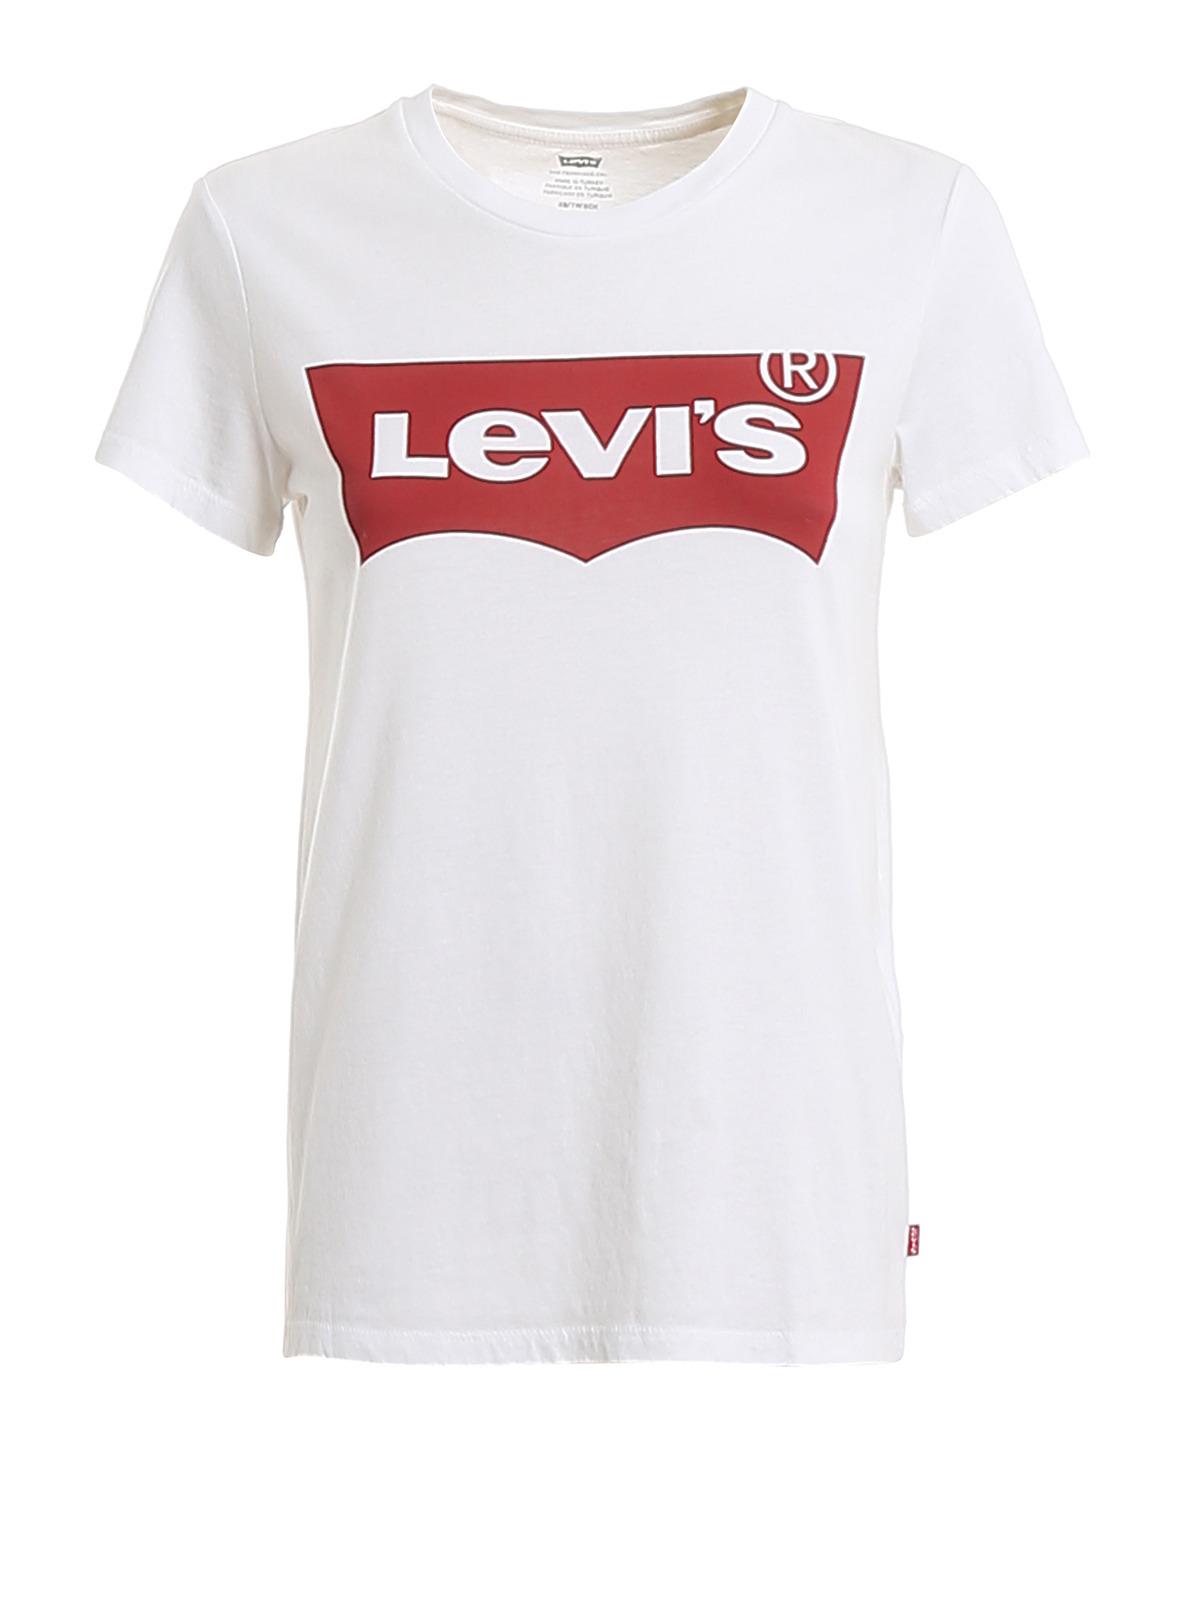 levis shirts online